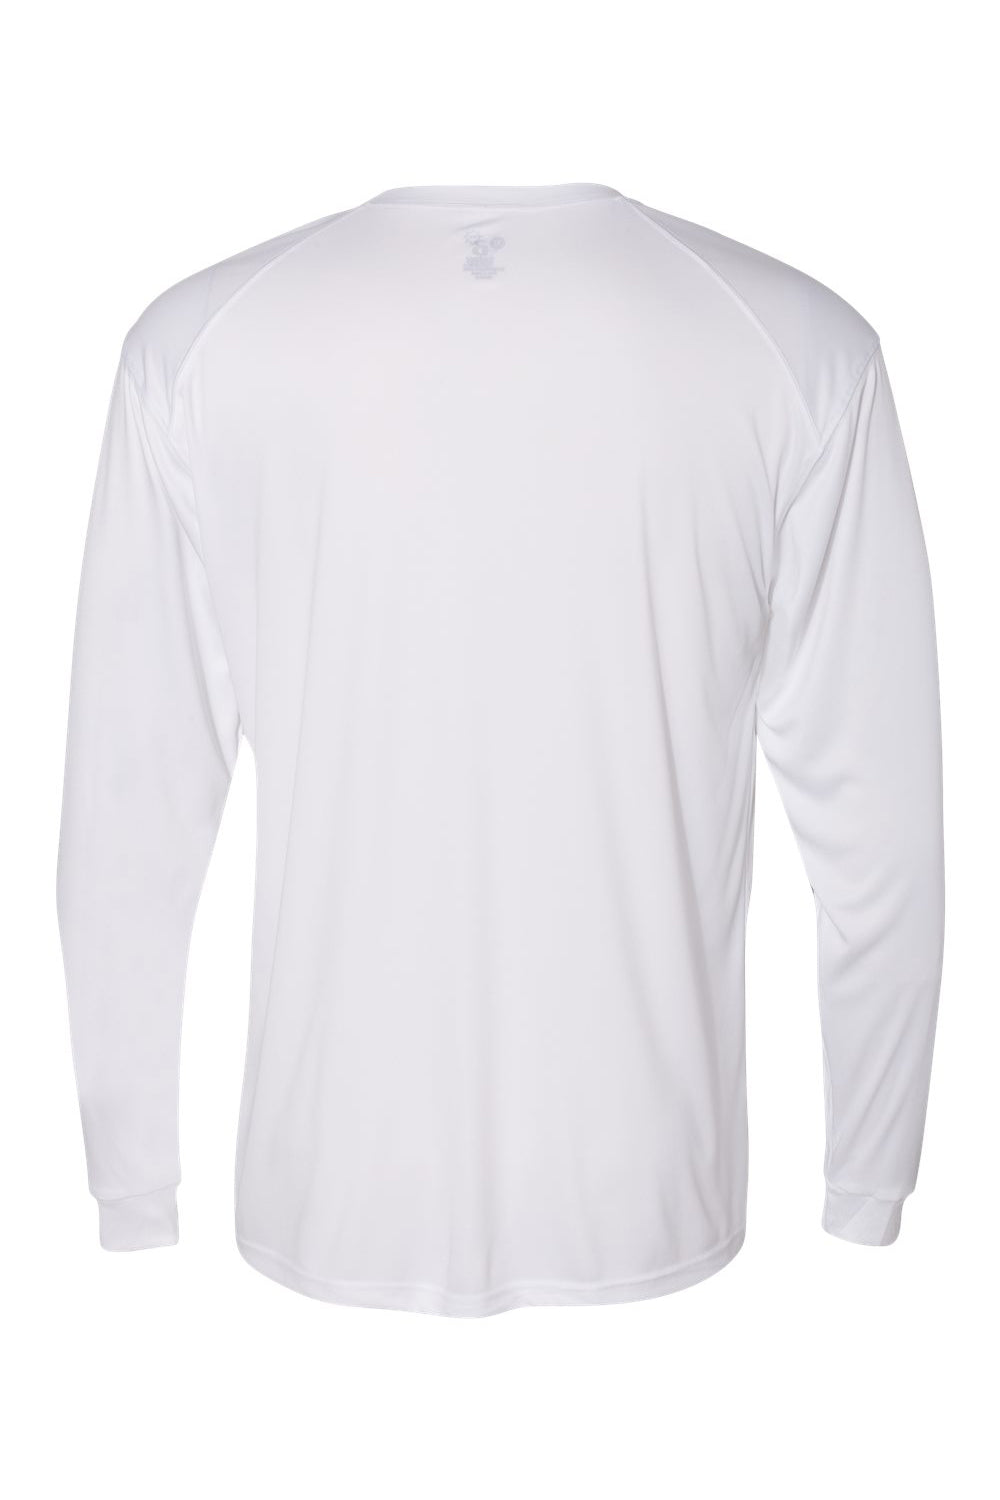 Badger 4004 Mens Ultimate SoftLock Moisture Wicking Long Sleeve Crewneck T-Shirt White Flat Back